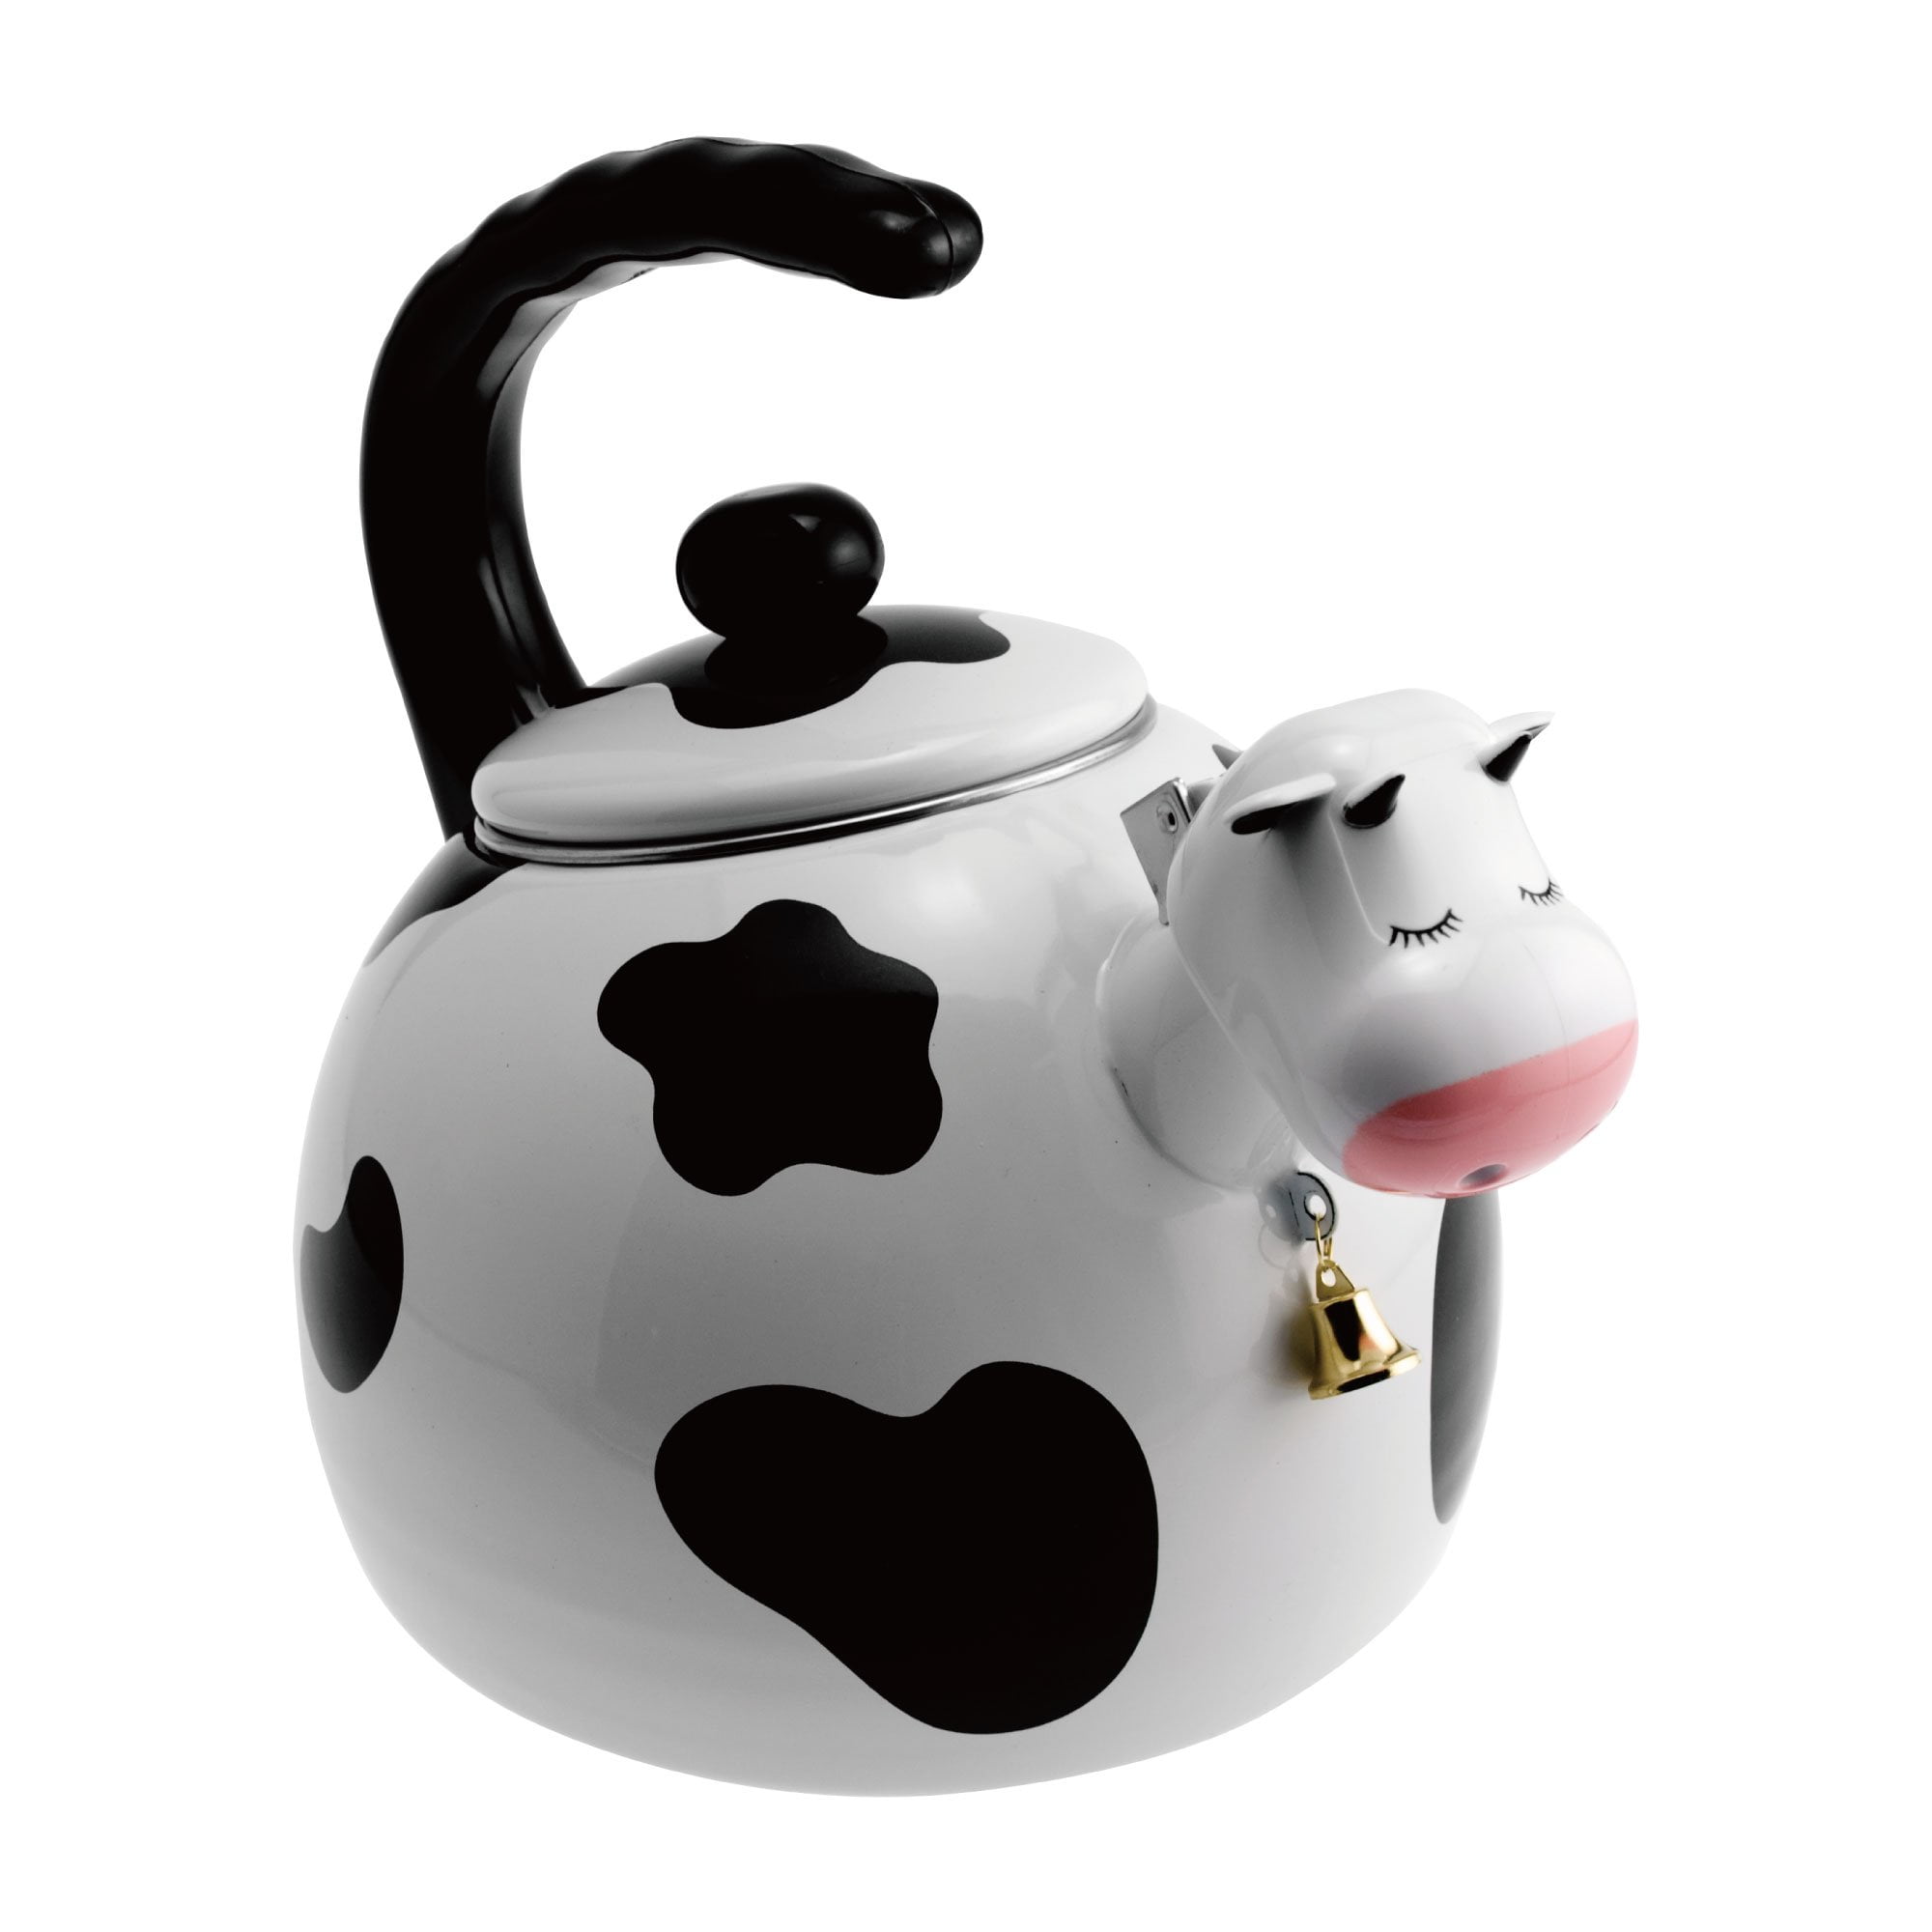 Home-X Whistling Tea Kettle - Cat Style, Stovetop Kettle, Enamel Steel, Vintage Style, Cute Animal Design, Teapot for Home Kitchen, 1.9 Quart, White